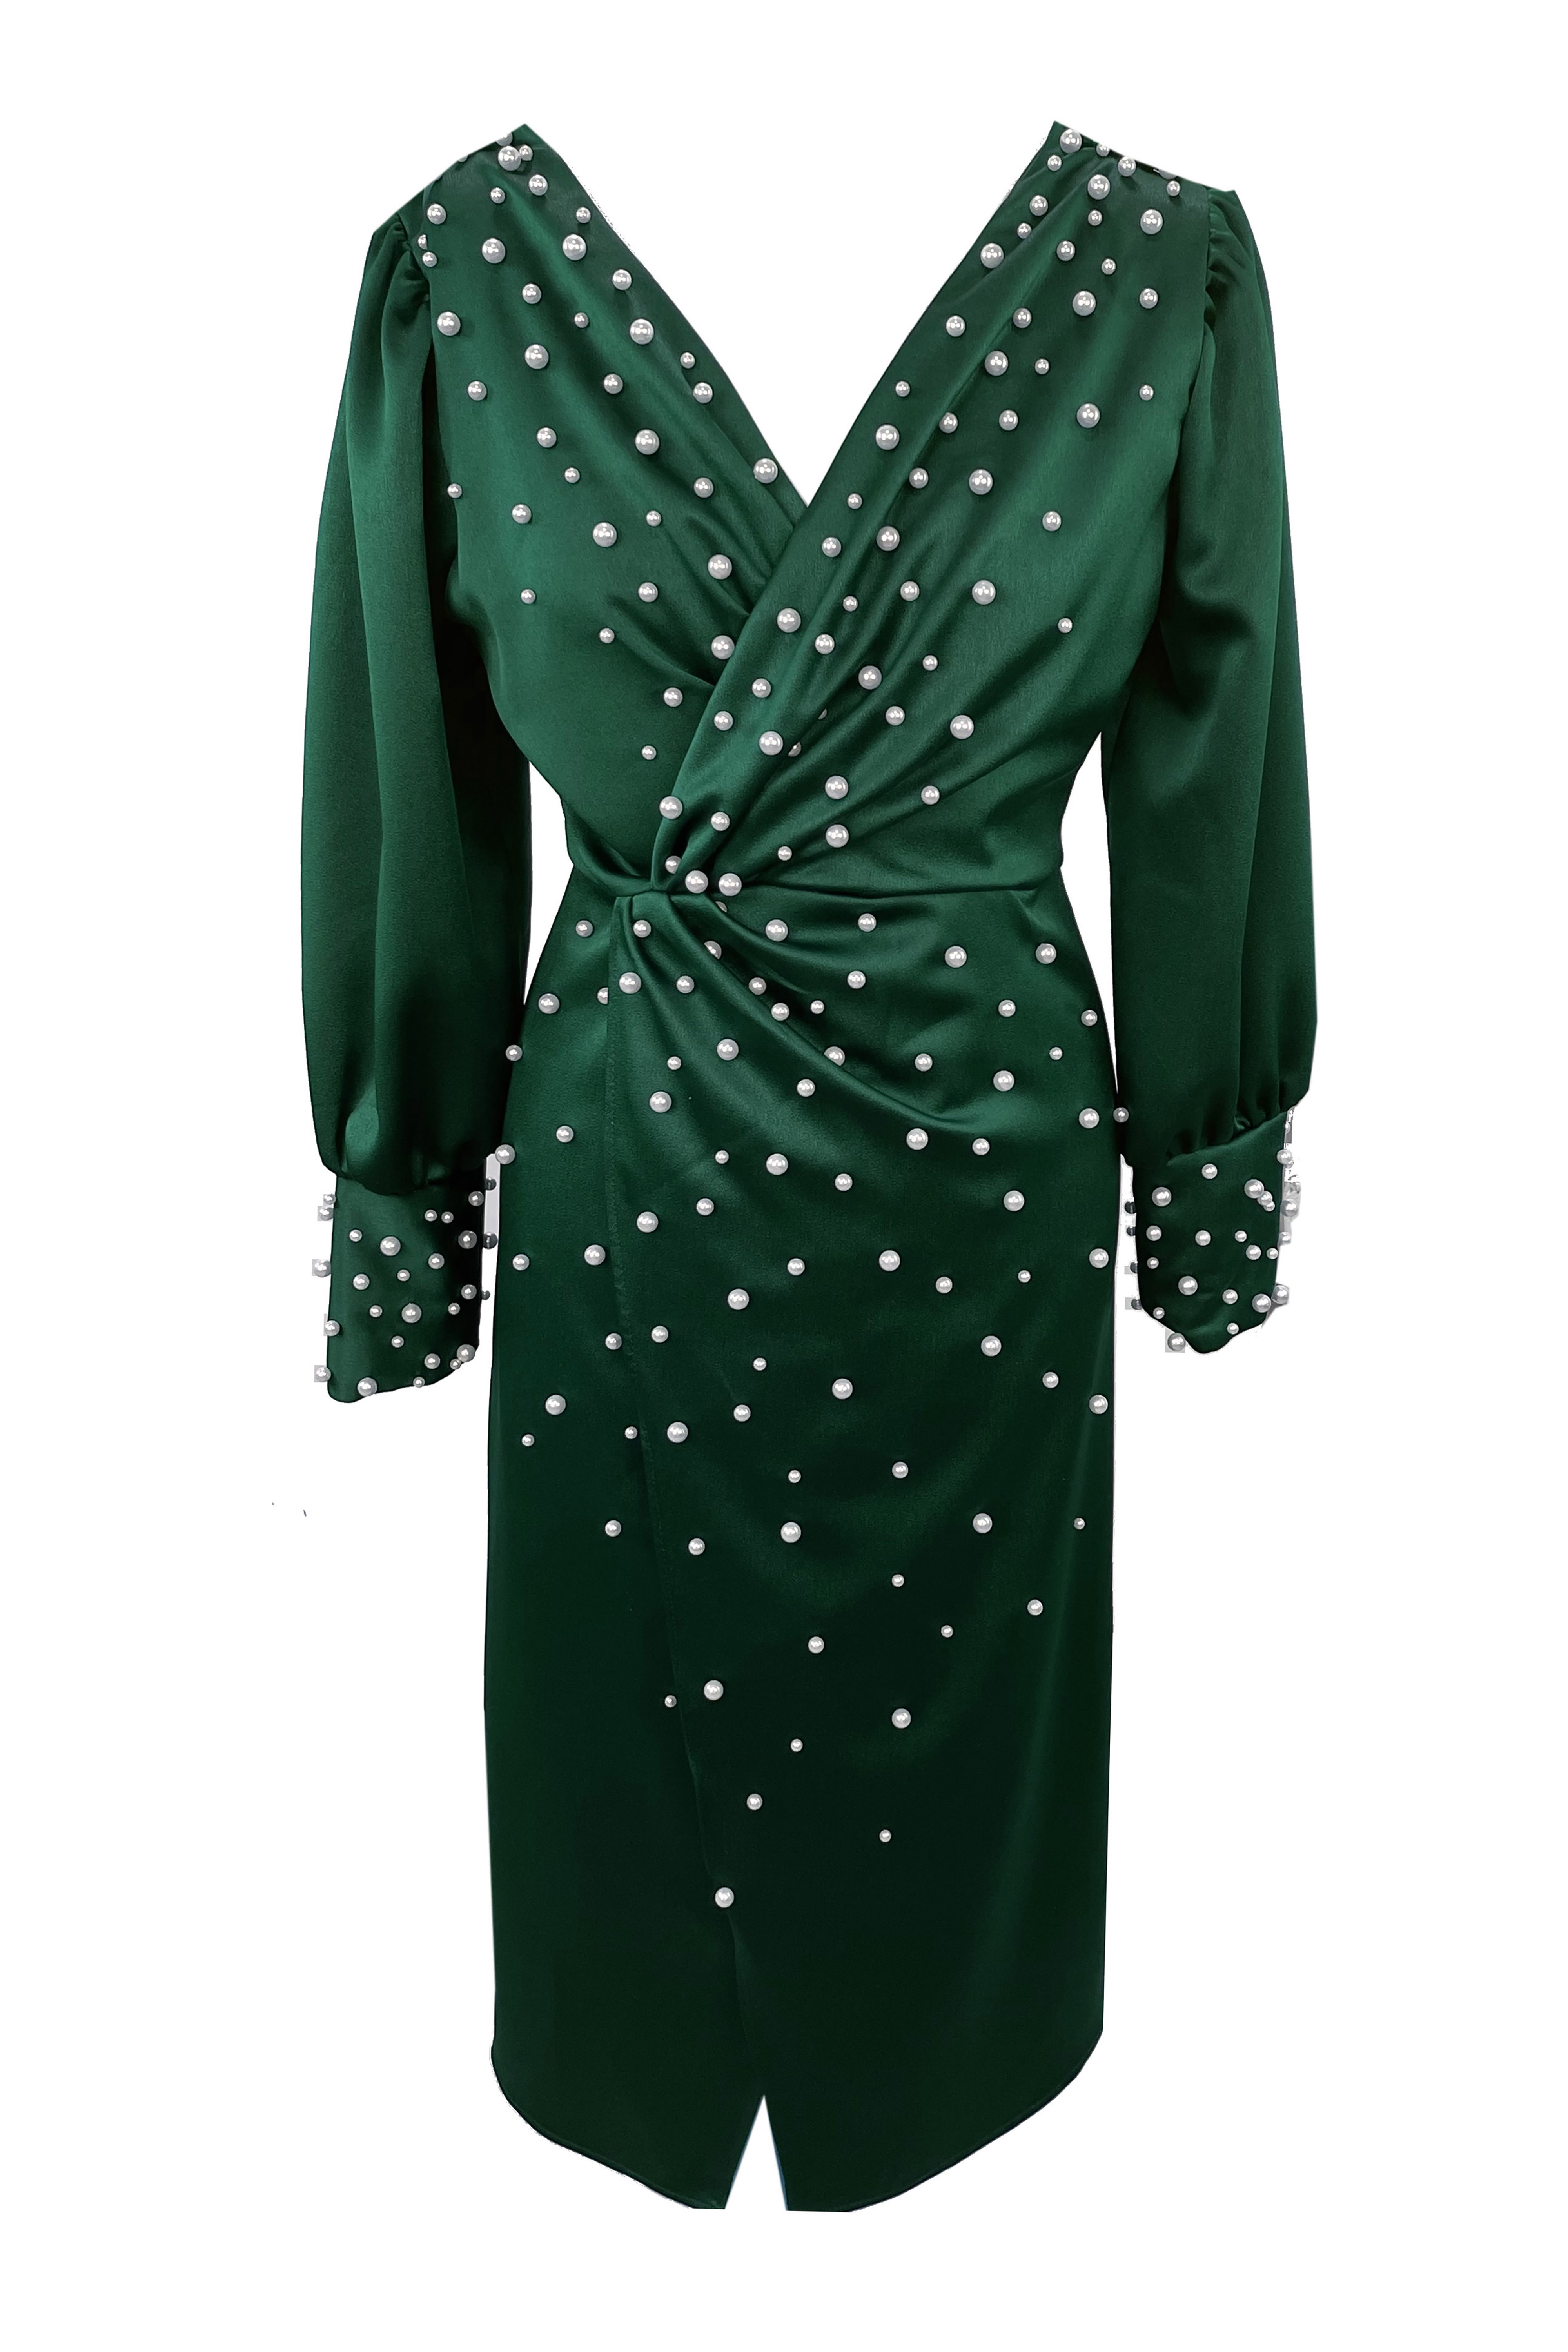 R24101 - GREEN 01 - AMINA green dress with pearls - Ambar Studio